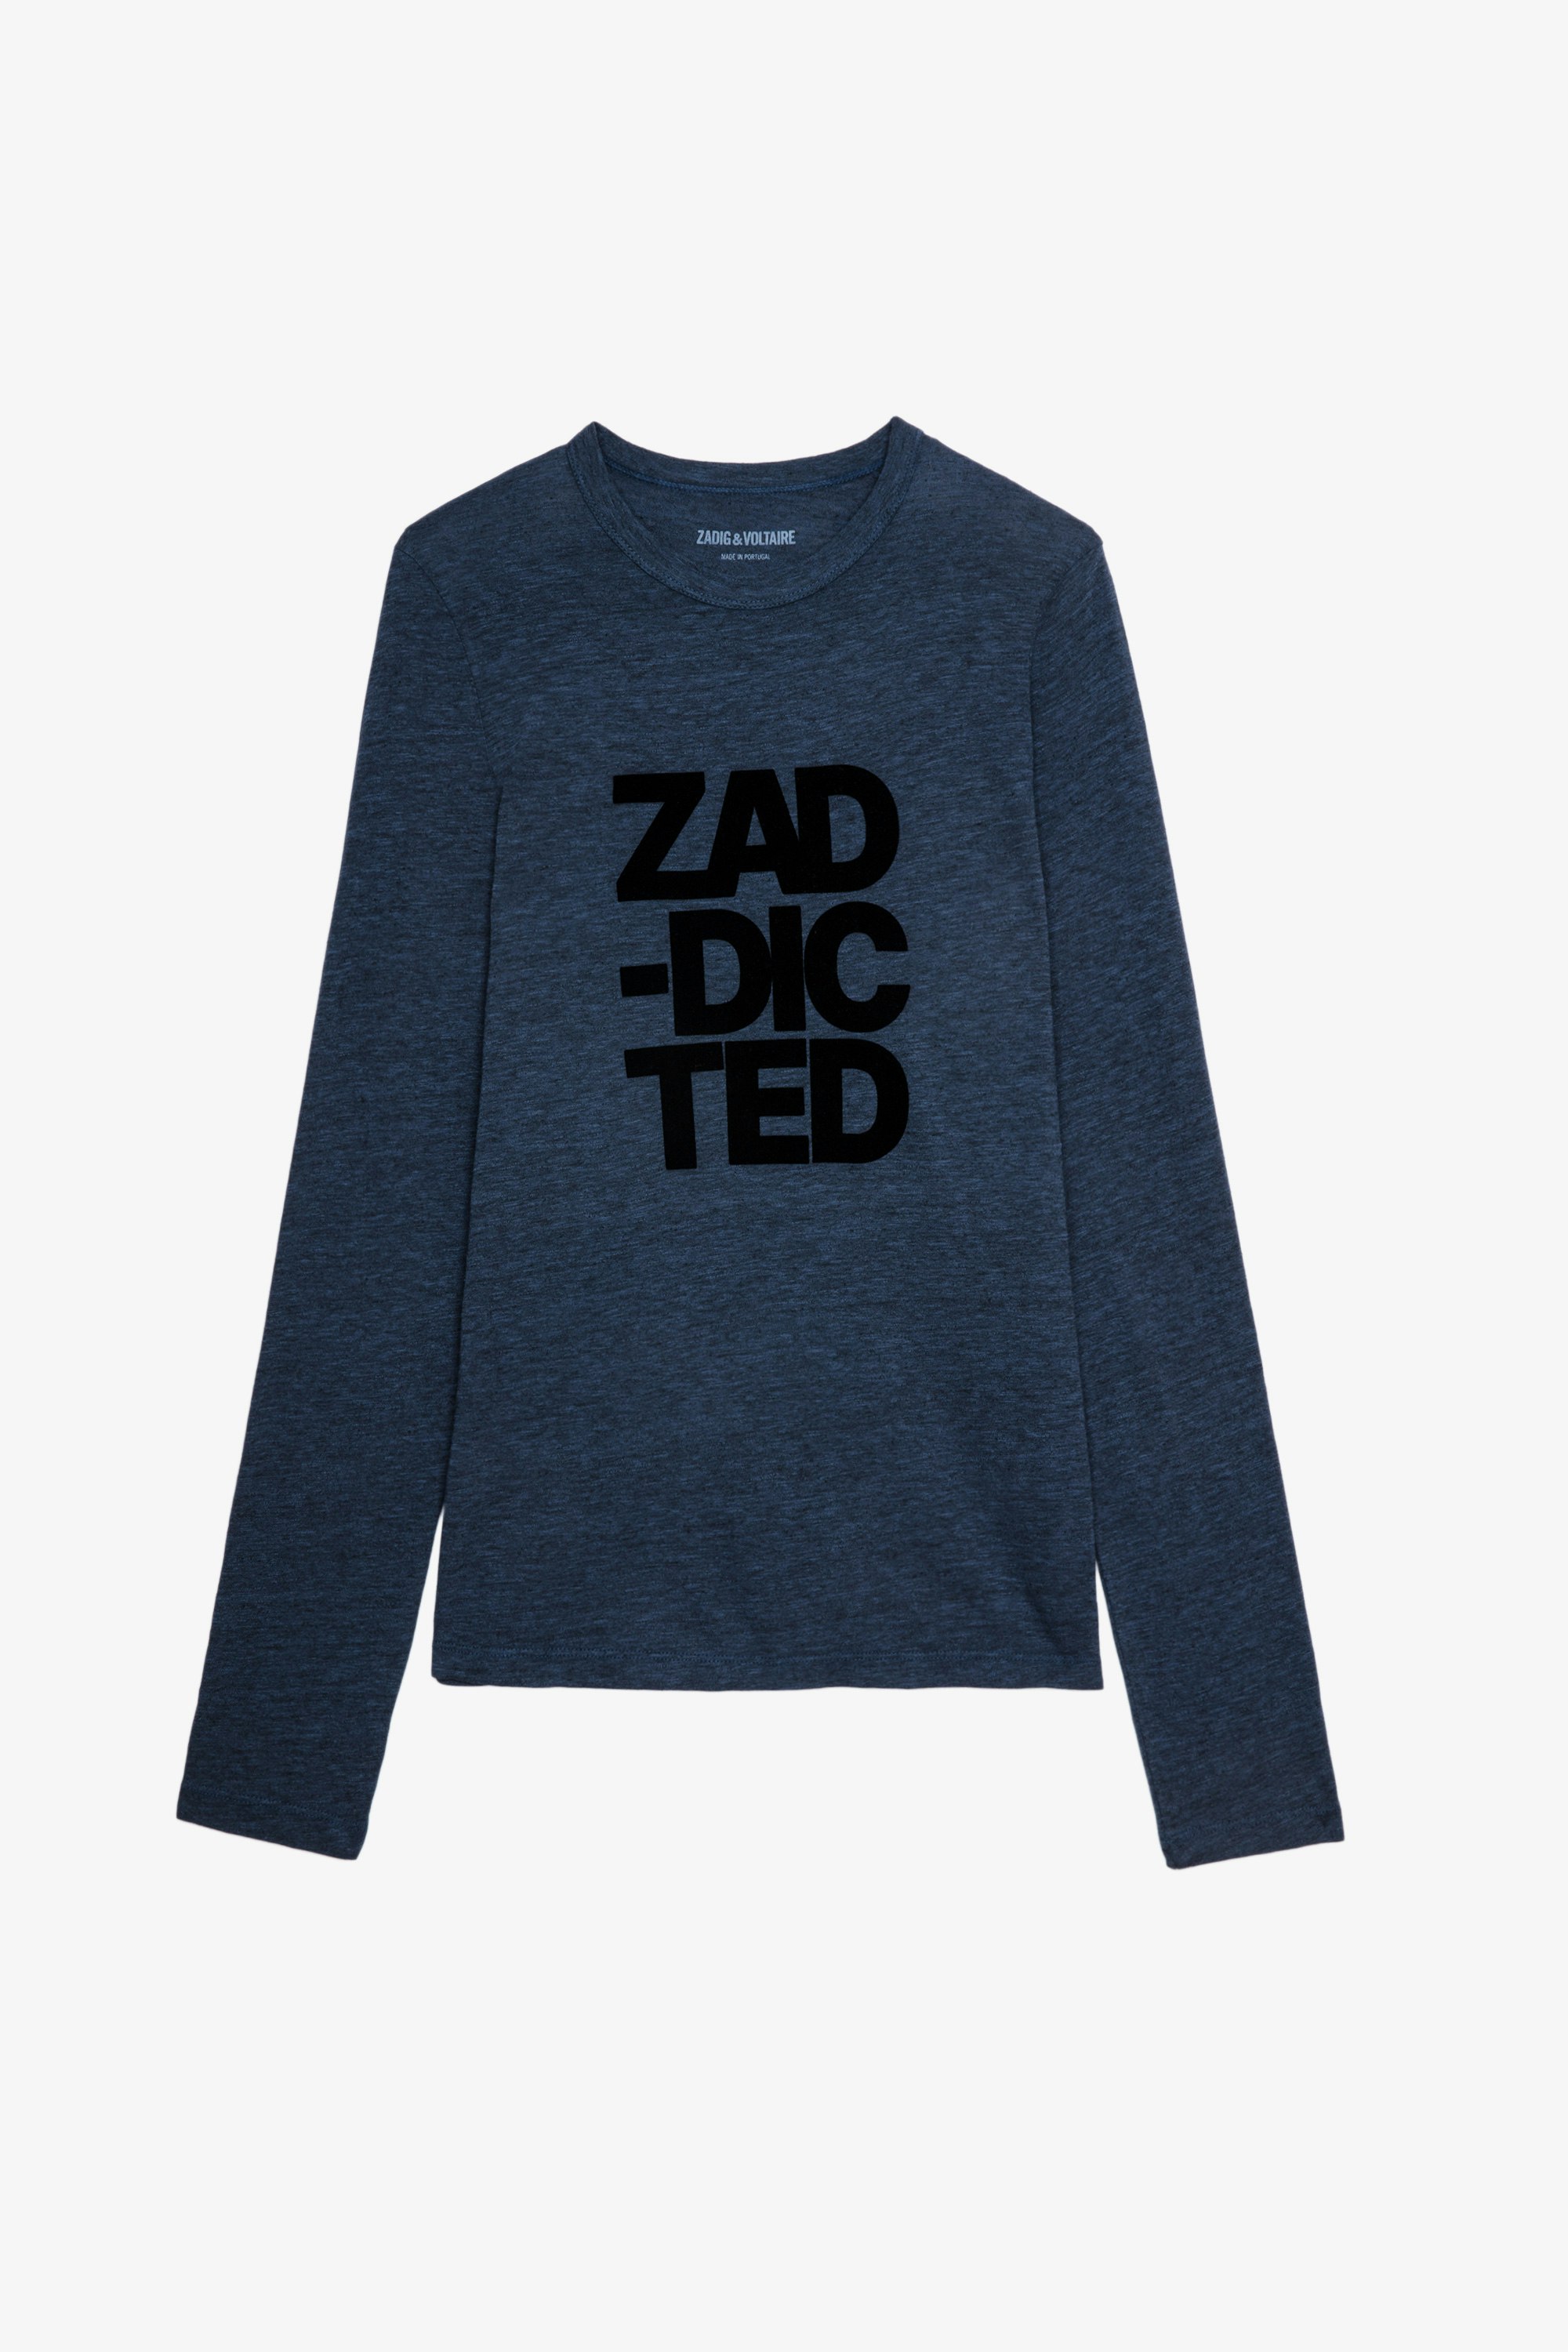 T-Shirt Willy Zaddicted Blaues T-Shirt mit Aufschrift Zaddicted